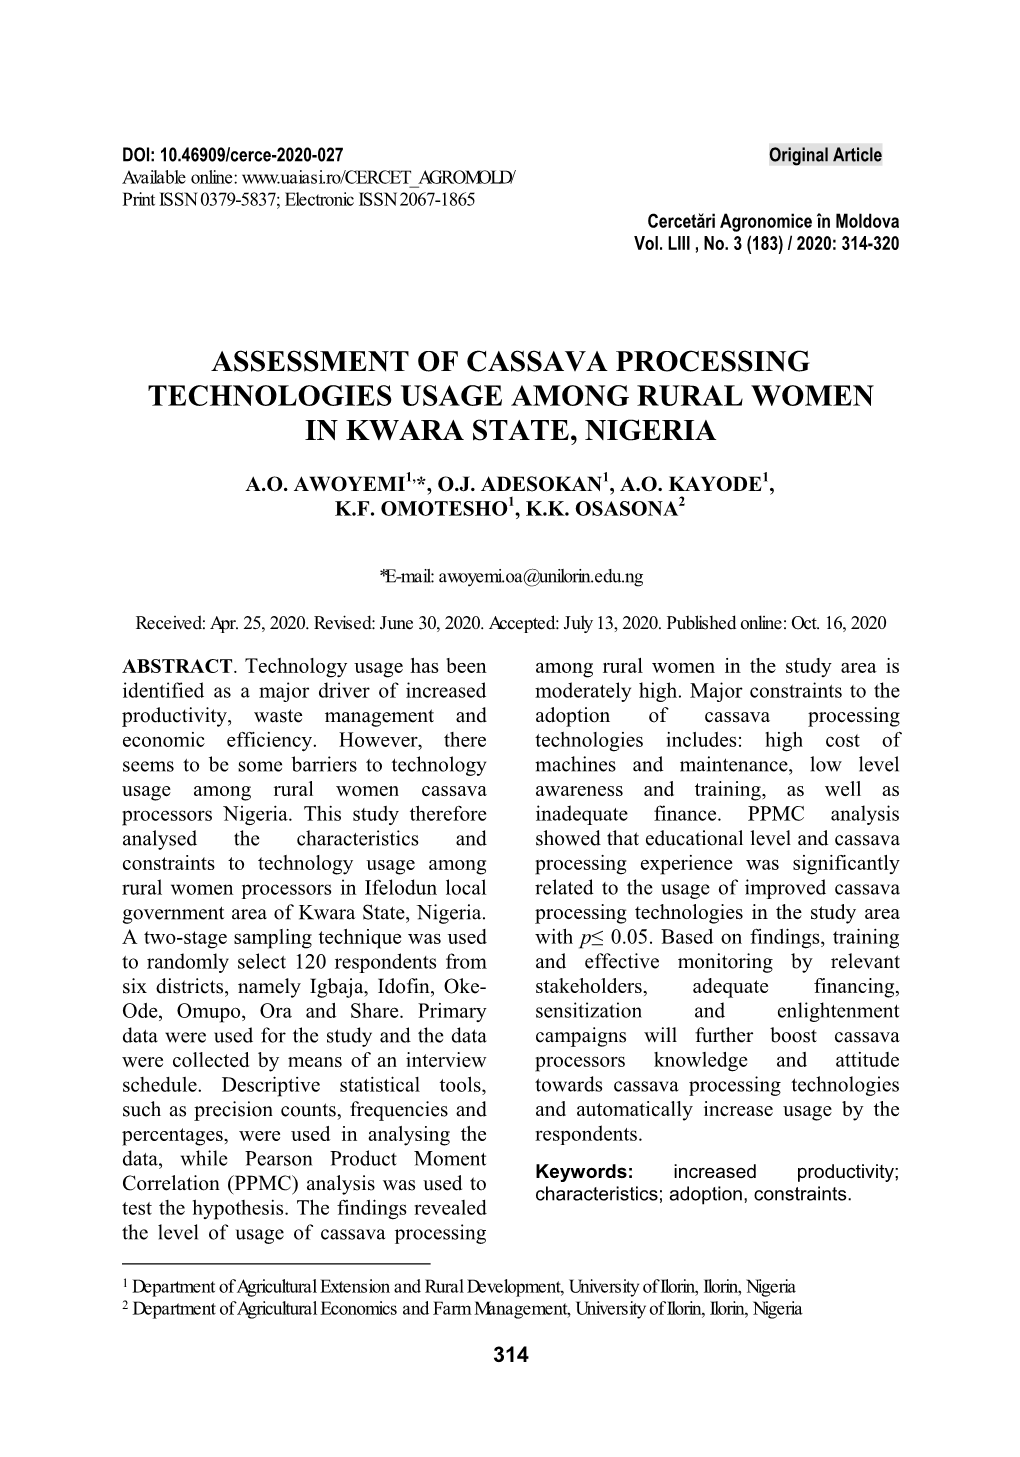 Assessment of Cassava Processing Technologies Usage Among Rural Women in Kwara State, Nigeria